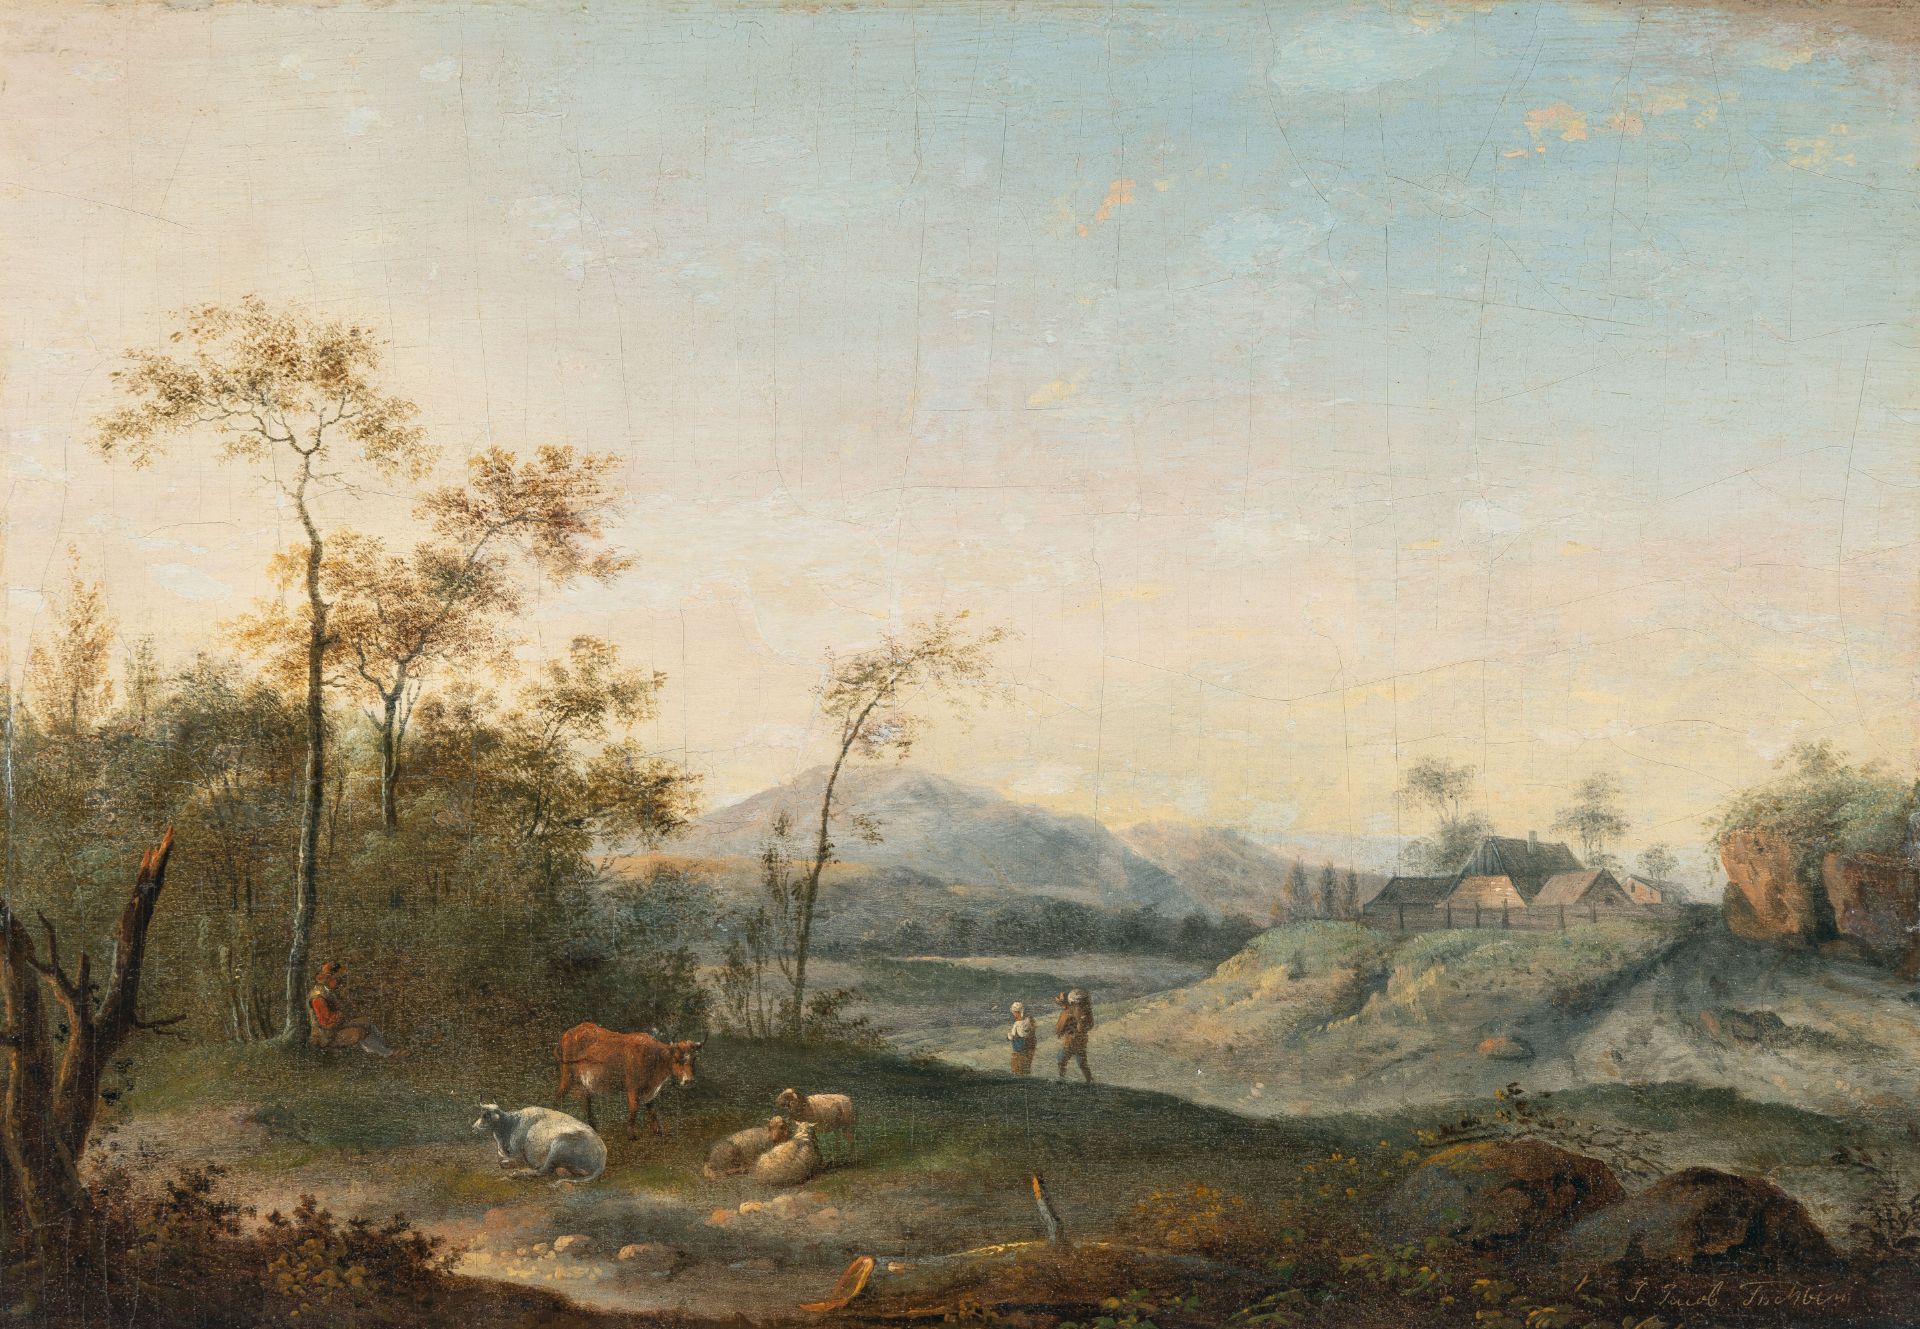 Johann Jakob Tischbein, Landscape with shepherds in evening light.Oil on panel. 26 x 37.1 cm. Signed